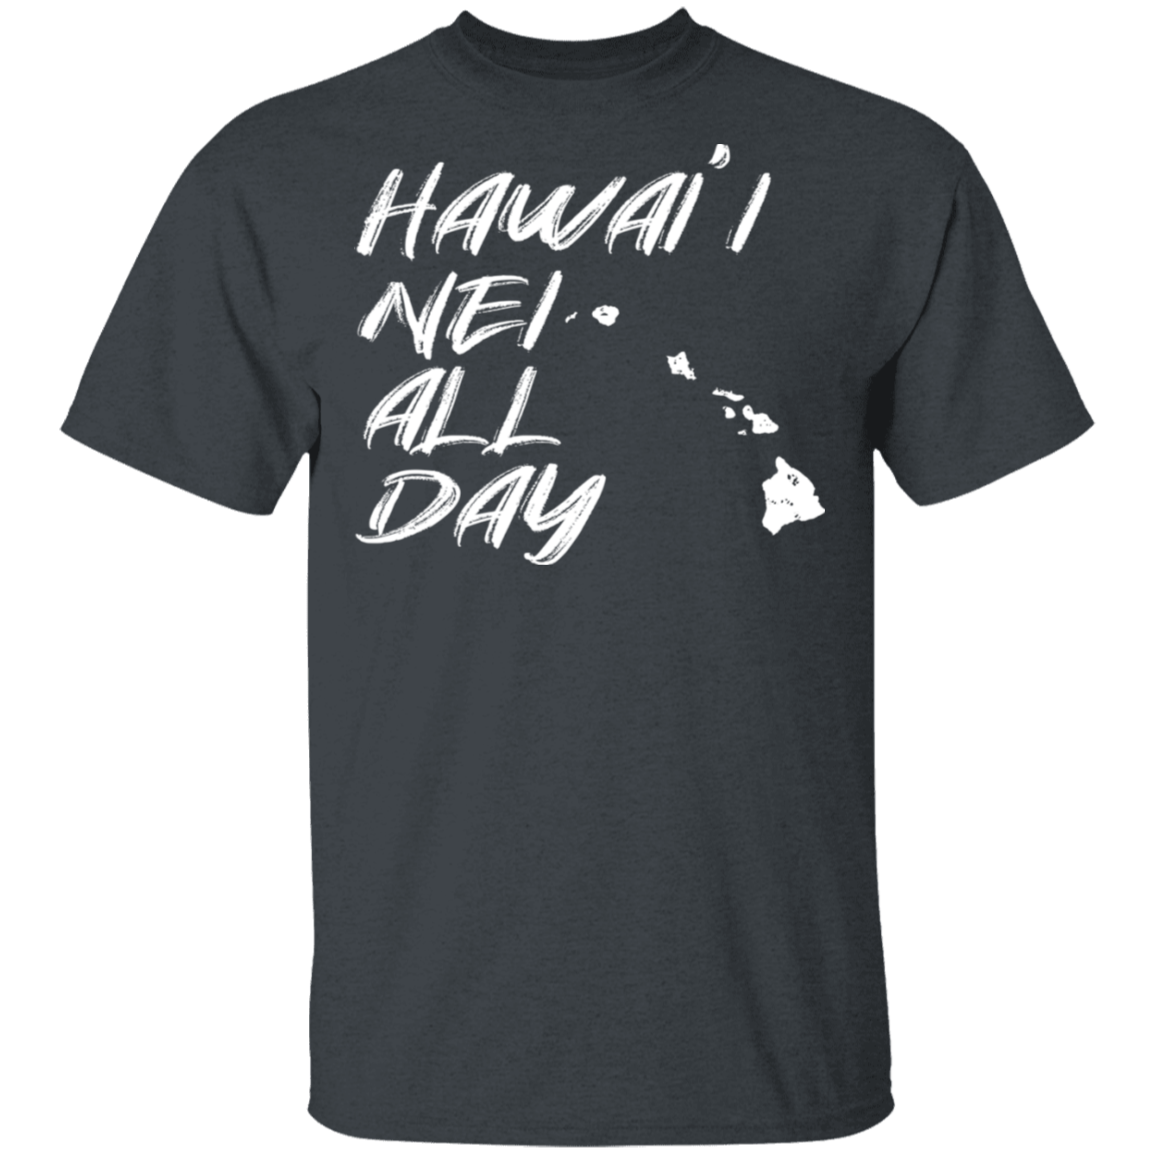 Hawai'i Nei All Day Islands T-Shirt